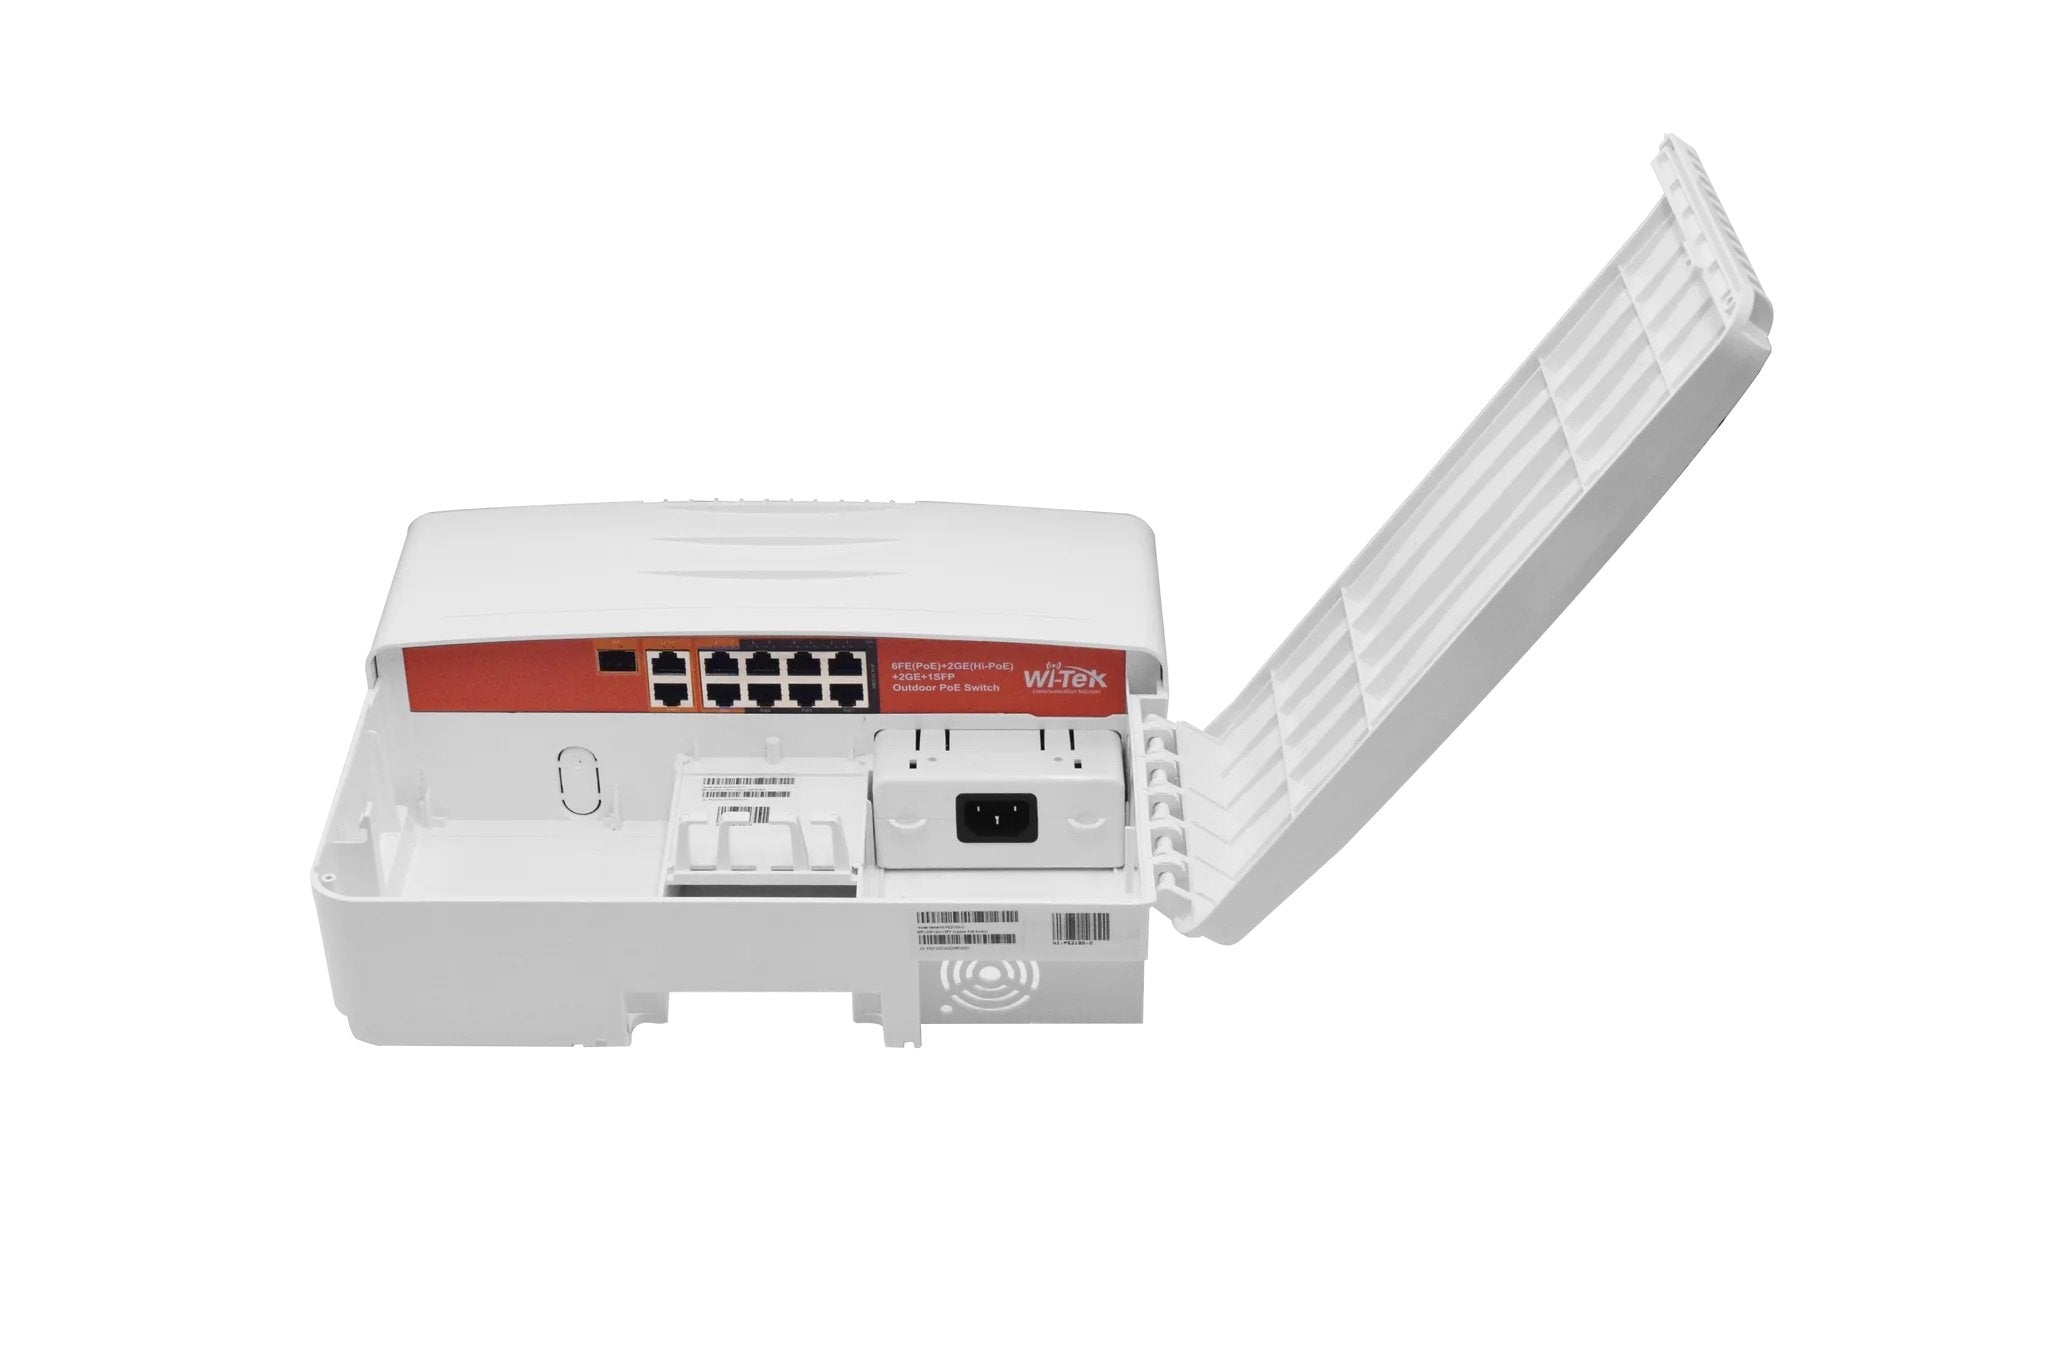 Wi-Tek 10-Port Gigabit Outdoor POE Switch, 6 x POE, 2 x Gigabit Hi-POE, 2 x Gigabit Uplink, 1 x SFP, 120W, Max 60W On Port 7 Or 8, IP65, Wall / Pole Mount